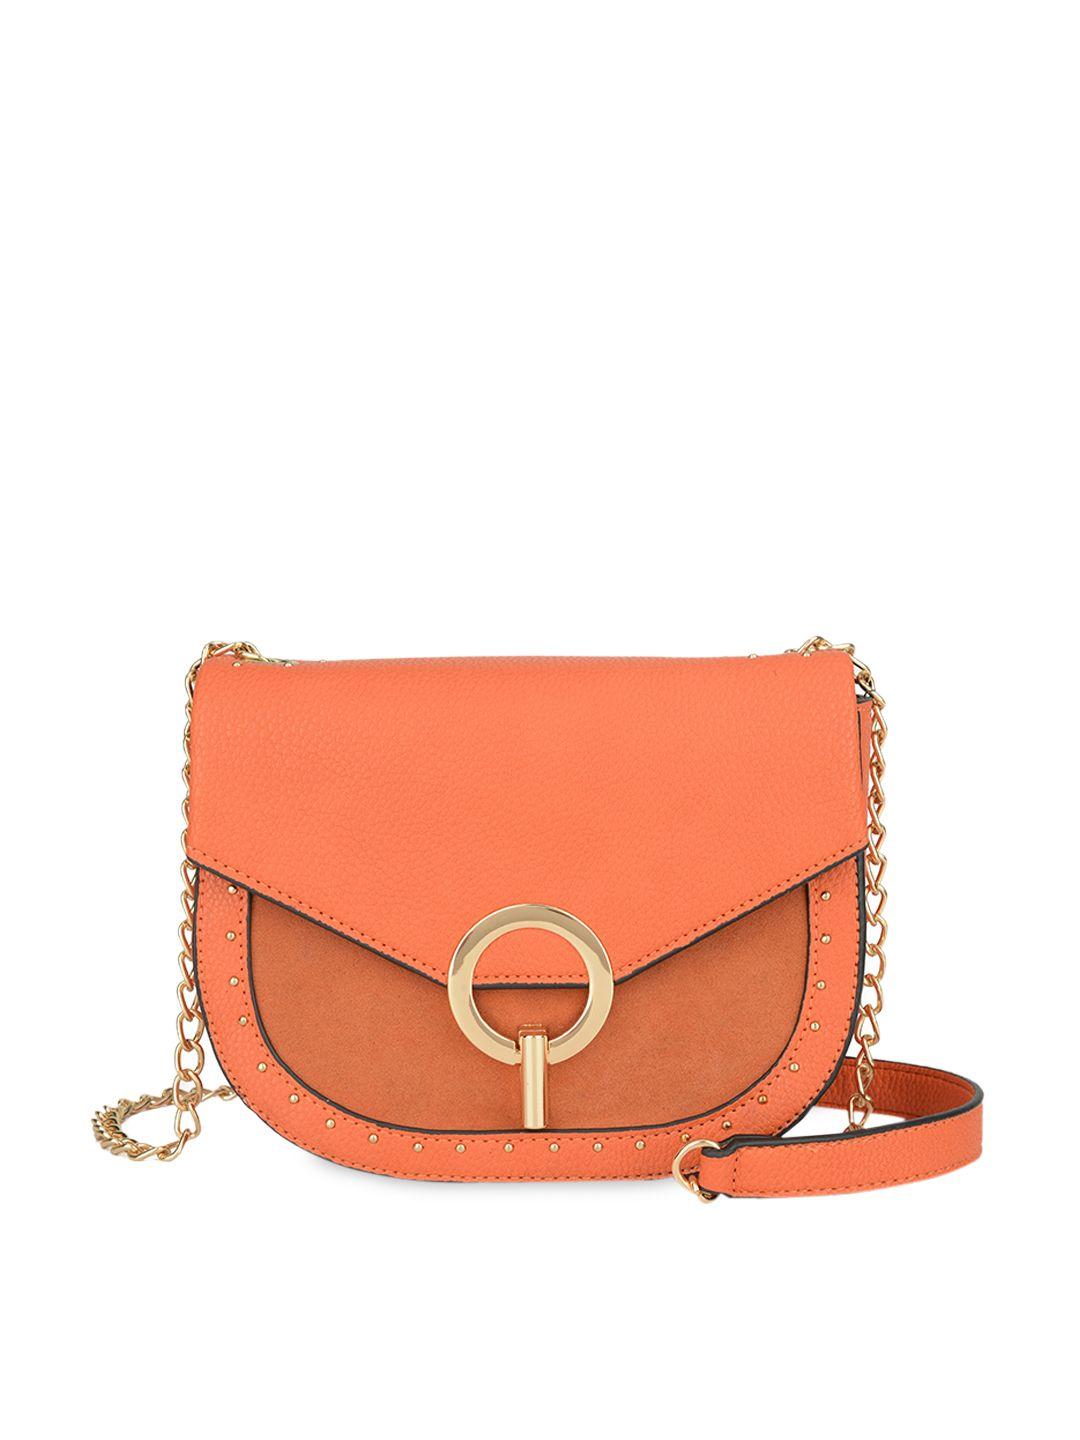 e2o orange colourblocked sling bag